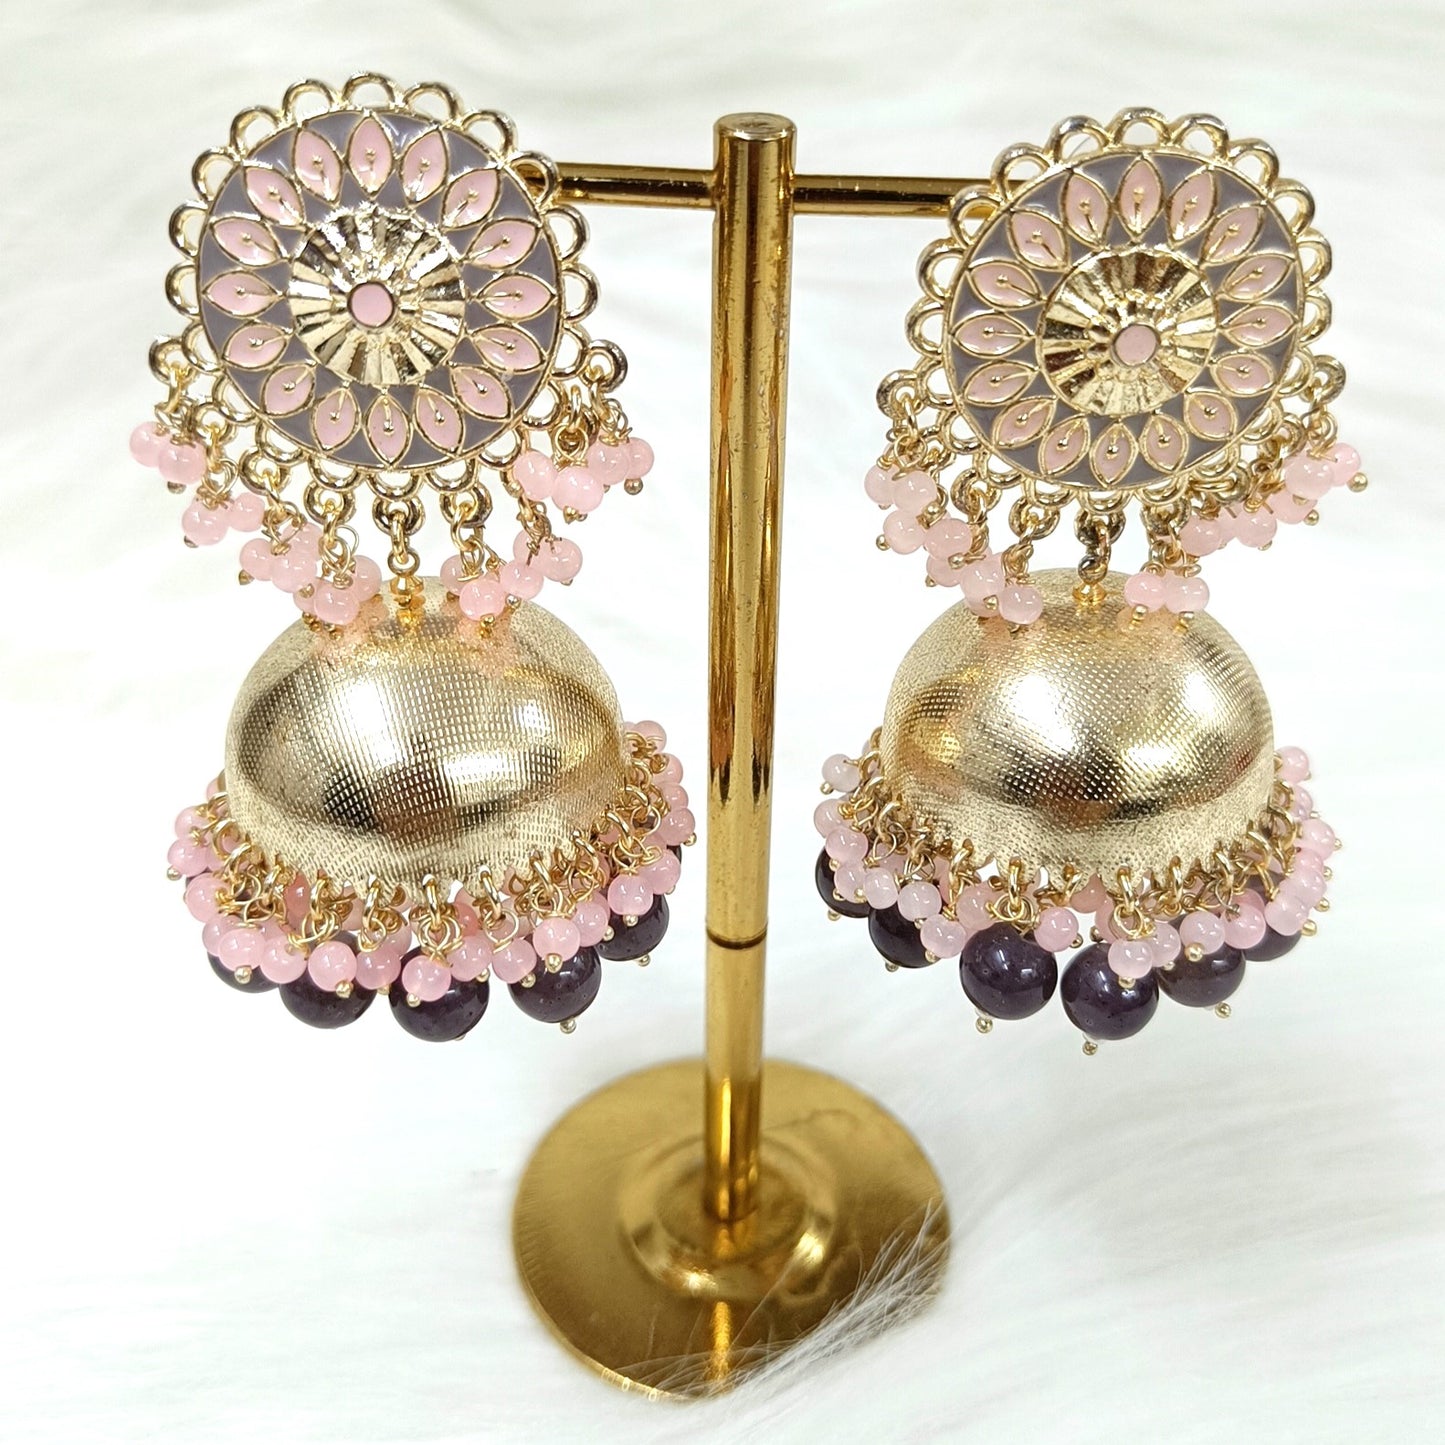 Bdiva 18K Gold Plated Meenakari Jhumka Earrings with Semi Cultured Pearls